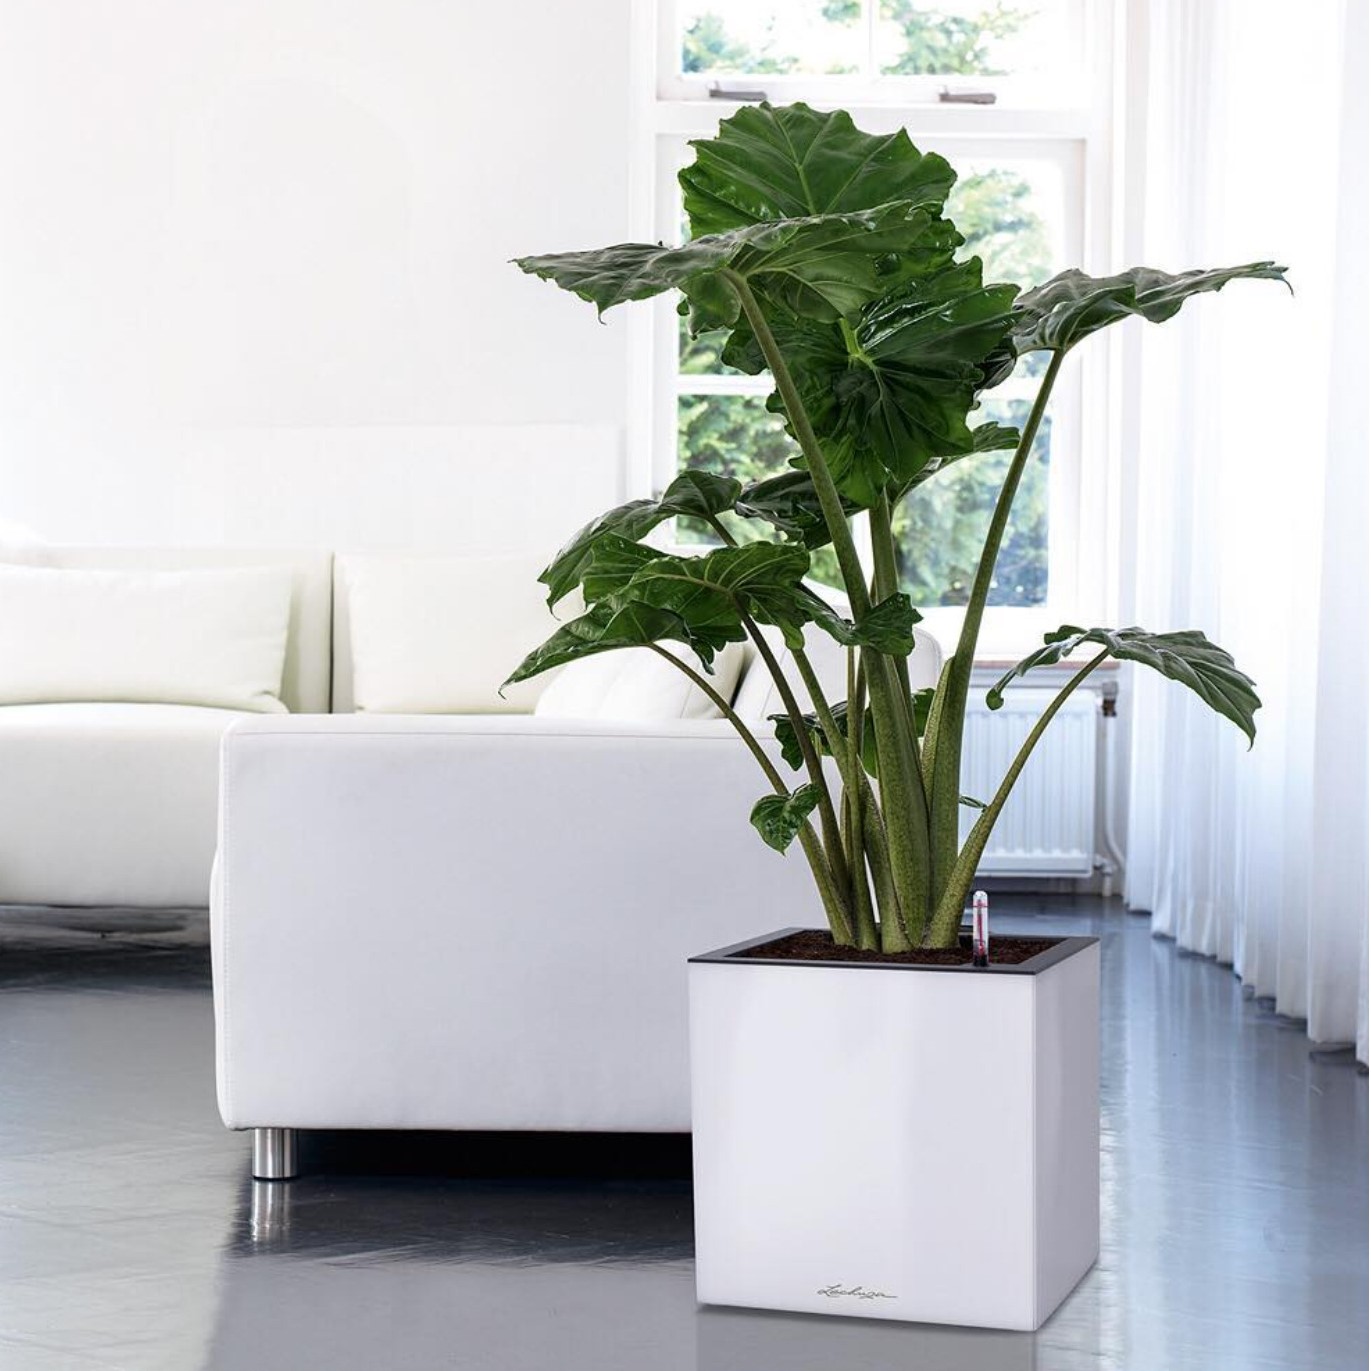 Vasi per piante grandi in resina per abbienti moderni interni e